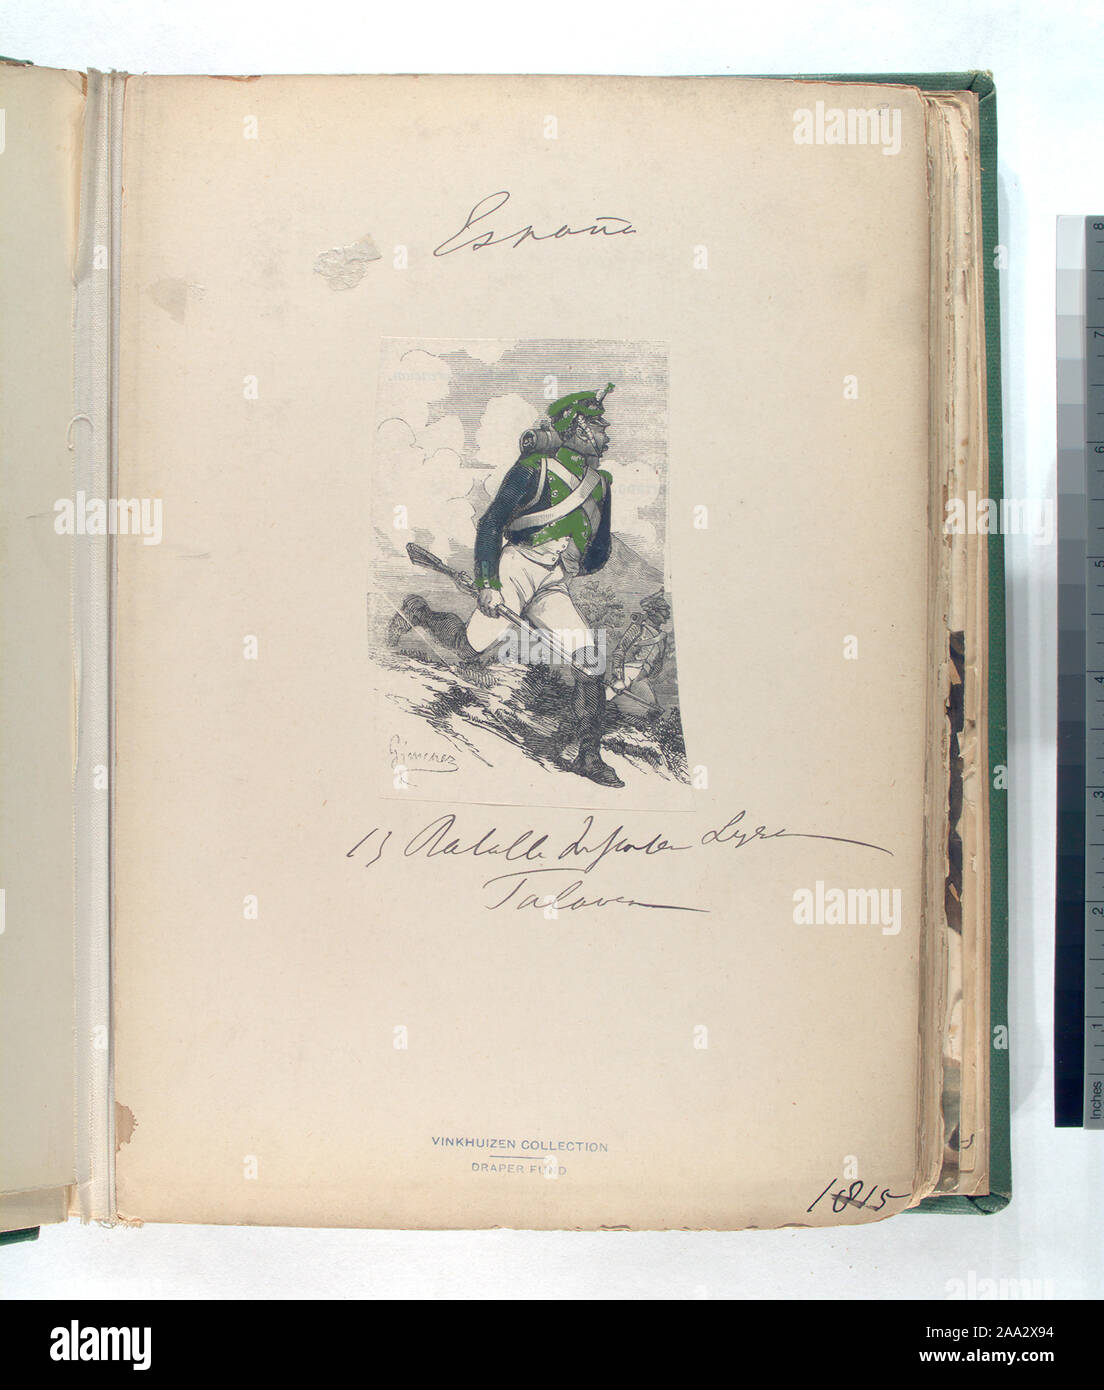 Draper Fund; 13 Batall. Infanteria Ligera. Talover. [?] 1815 Stock Photo